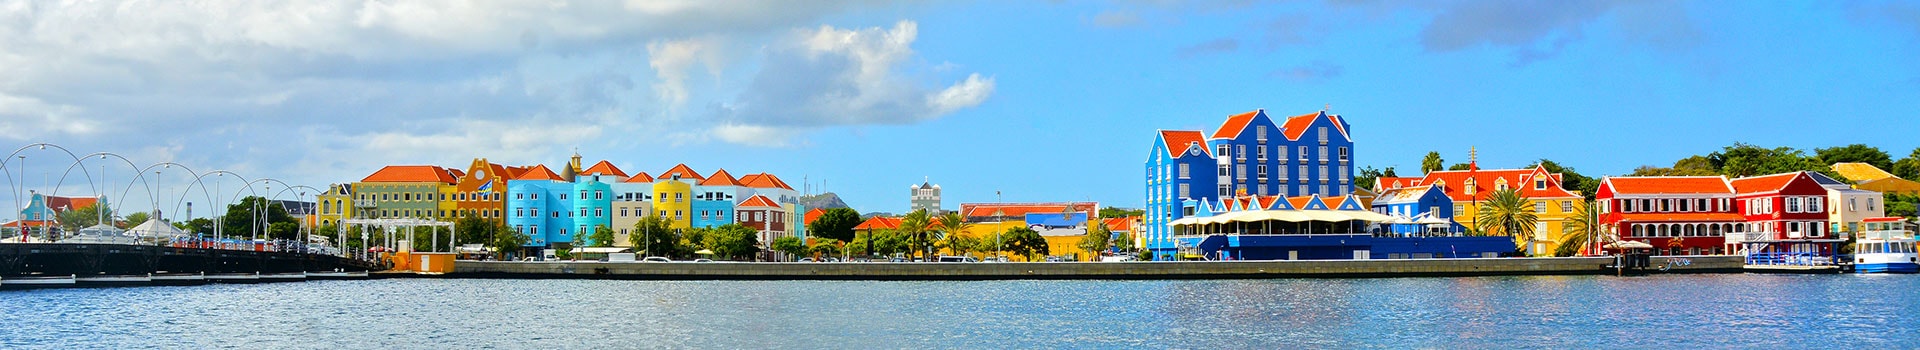 Lisboa - Willemstad